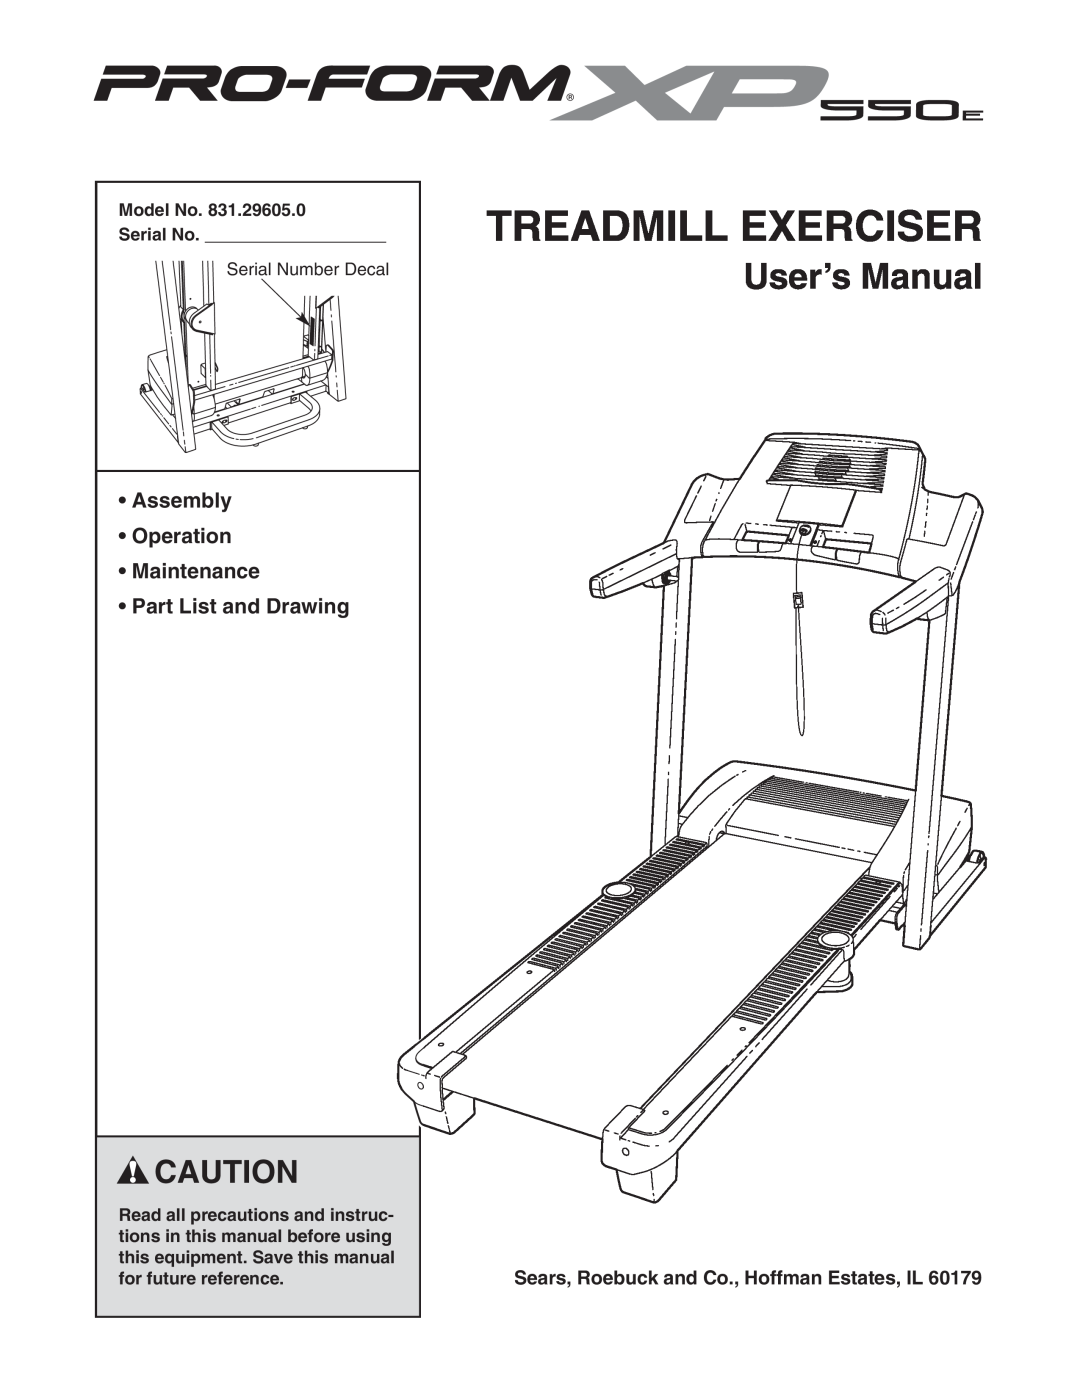 ProForm 831.29605.0 user manual Model No Serial No, Treadmill Exerciser, User’s Manual 